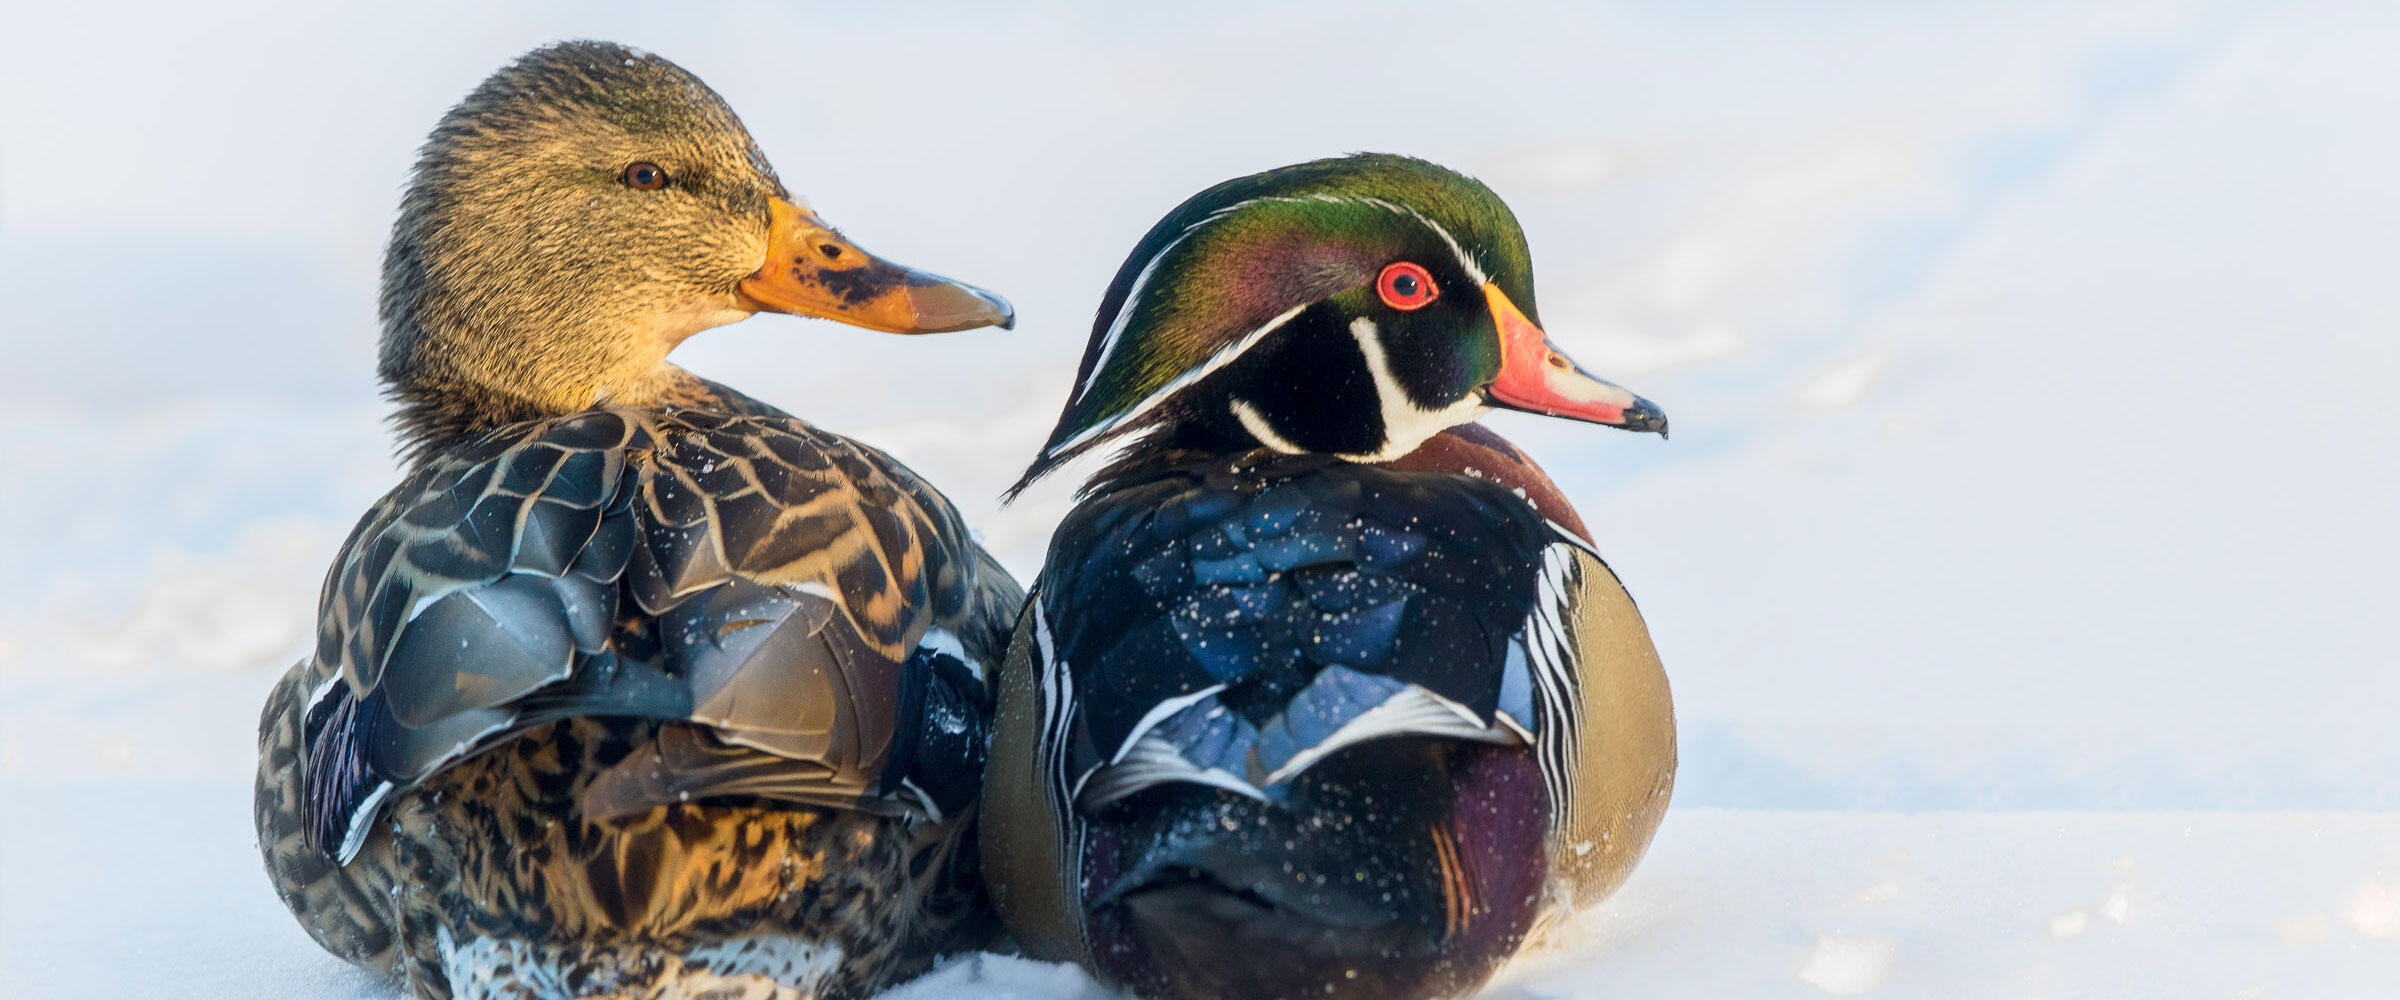 Female Mallard next to male Wood Duck, sitting on ice.